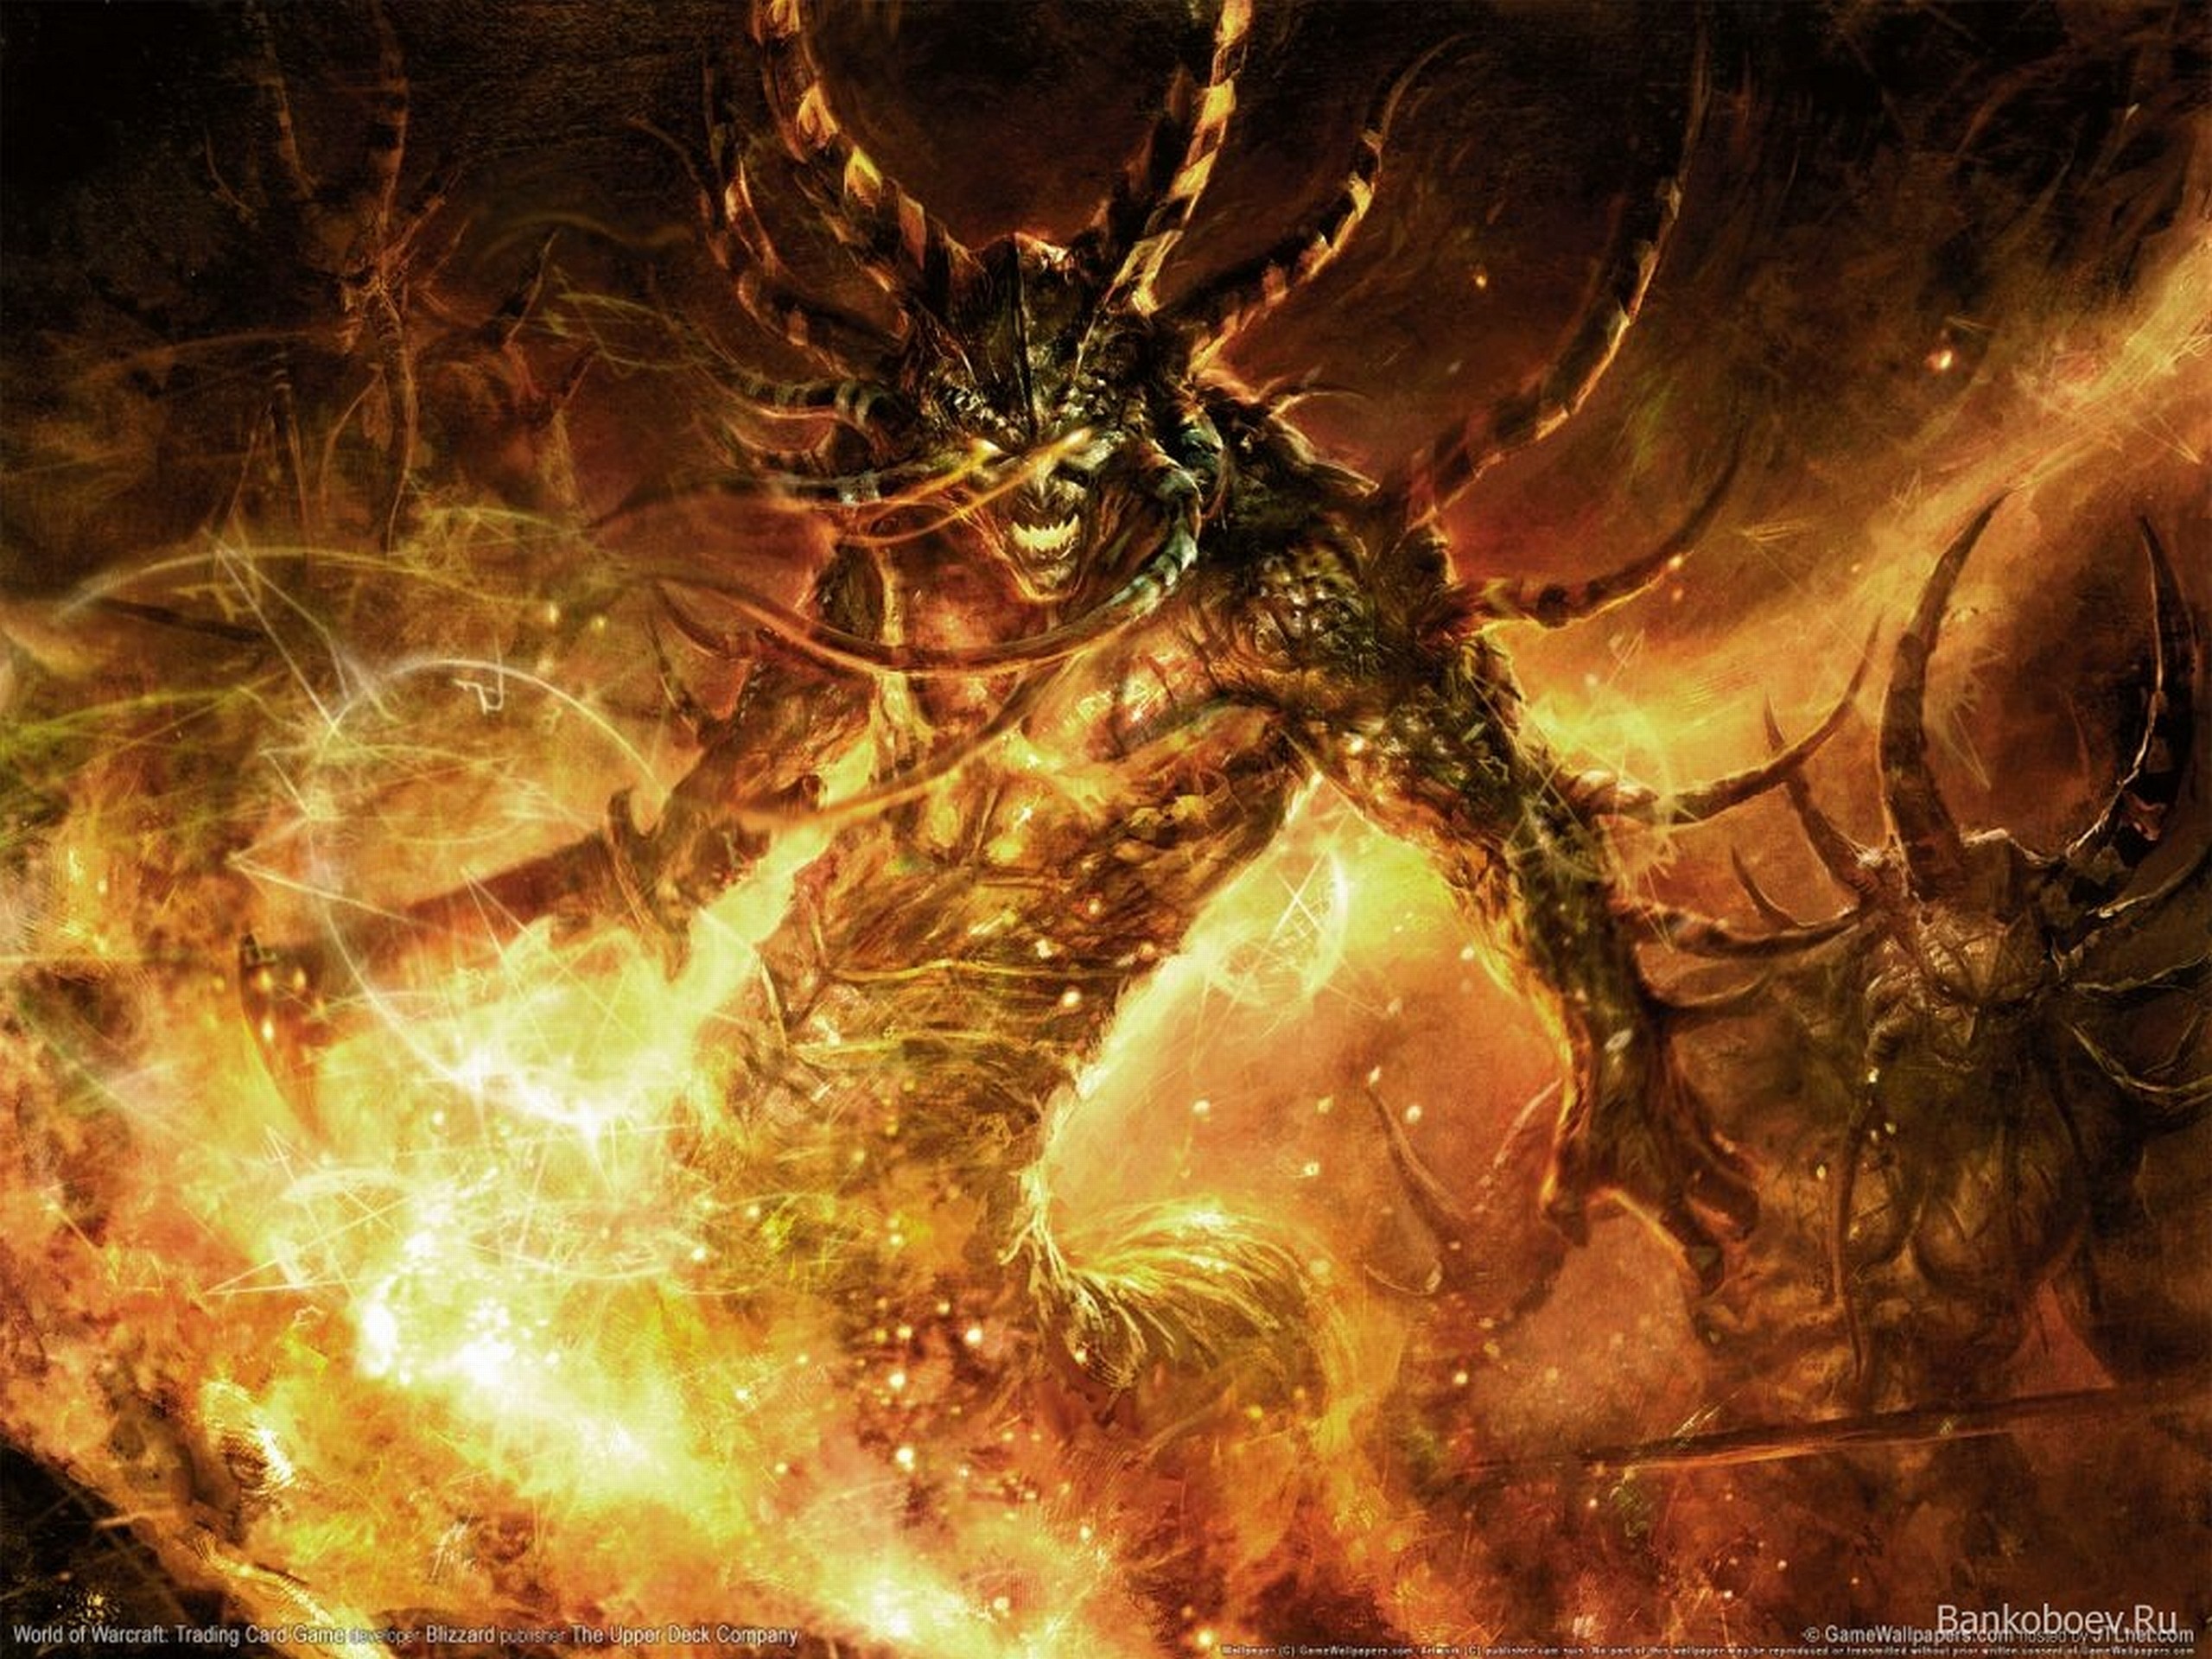 Fire World Of Warcraft World Of Warcraft Trading Card Game Creature Demon Fantasy Art 2560x1920